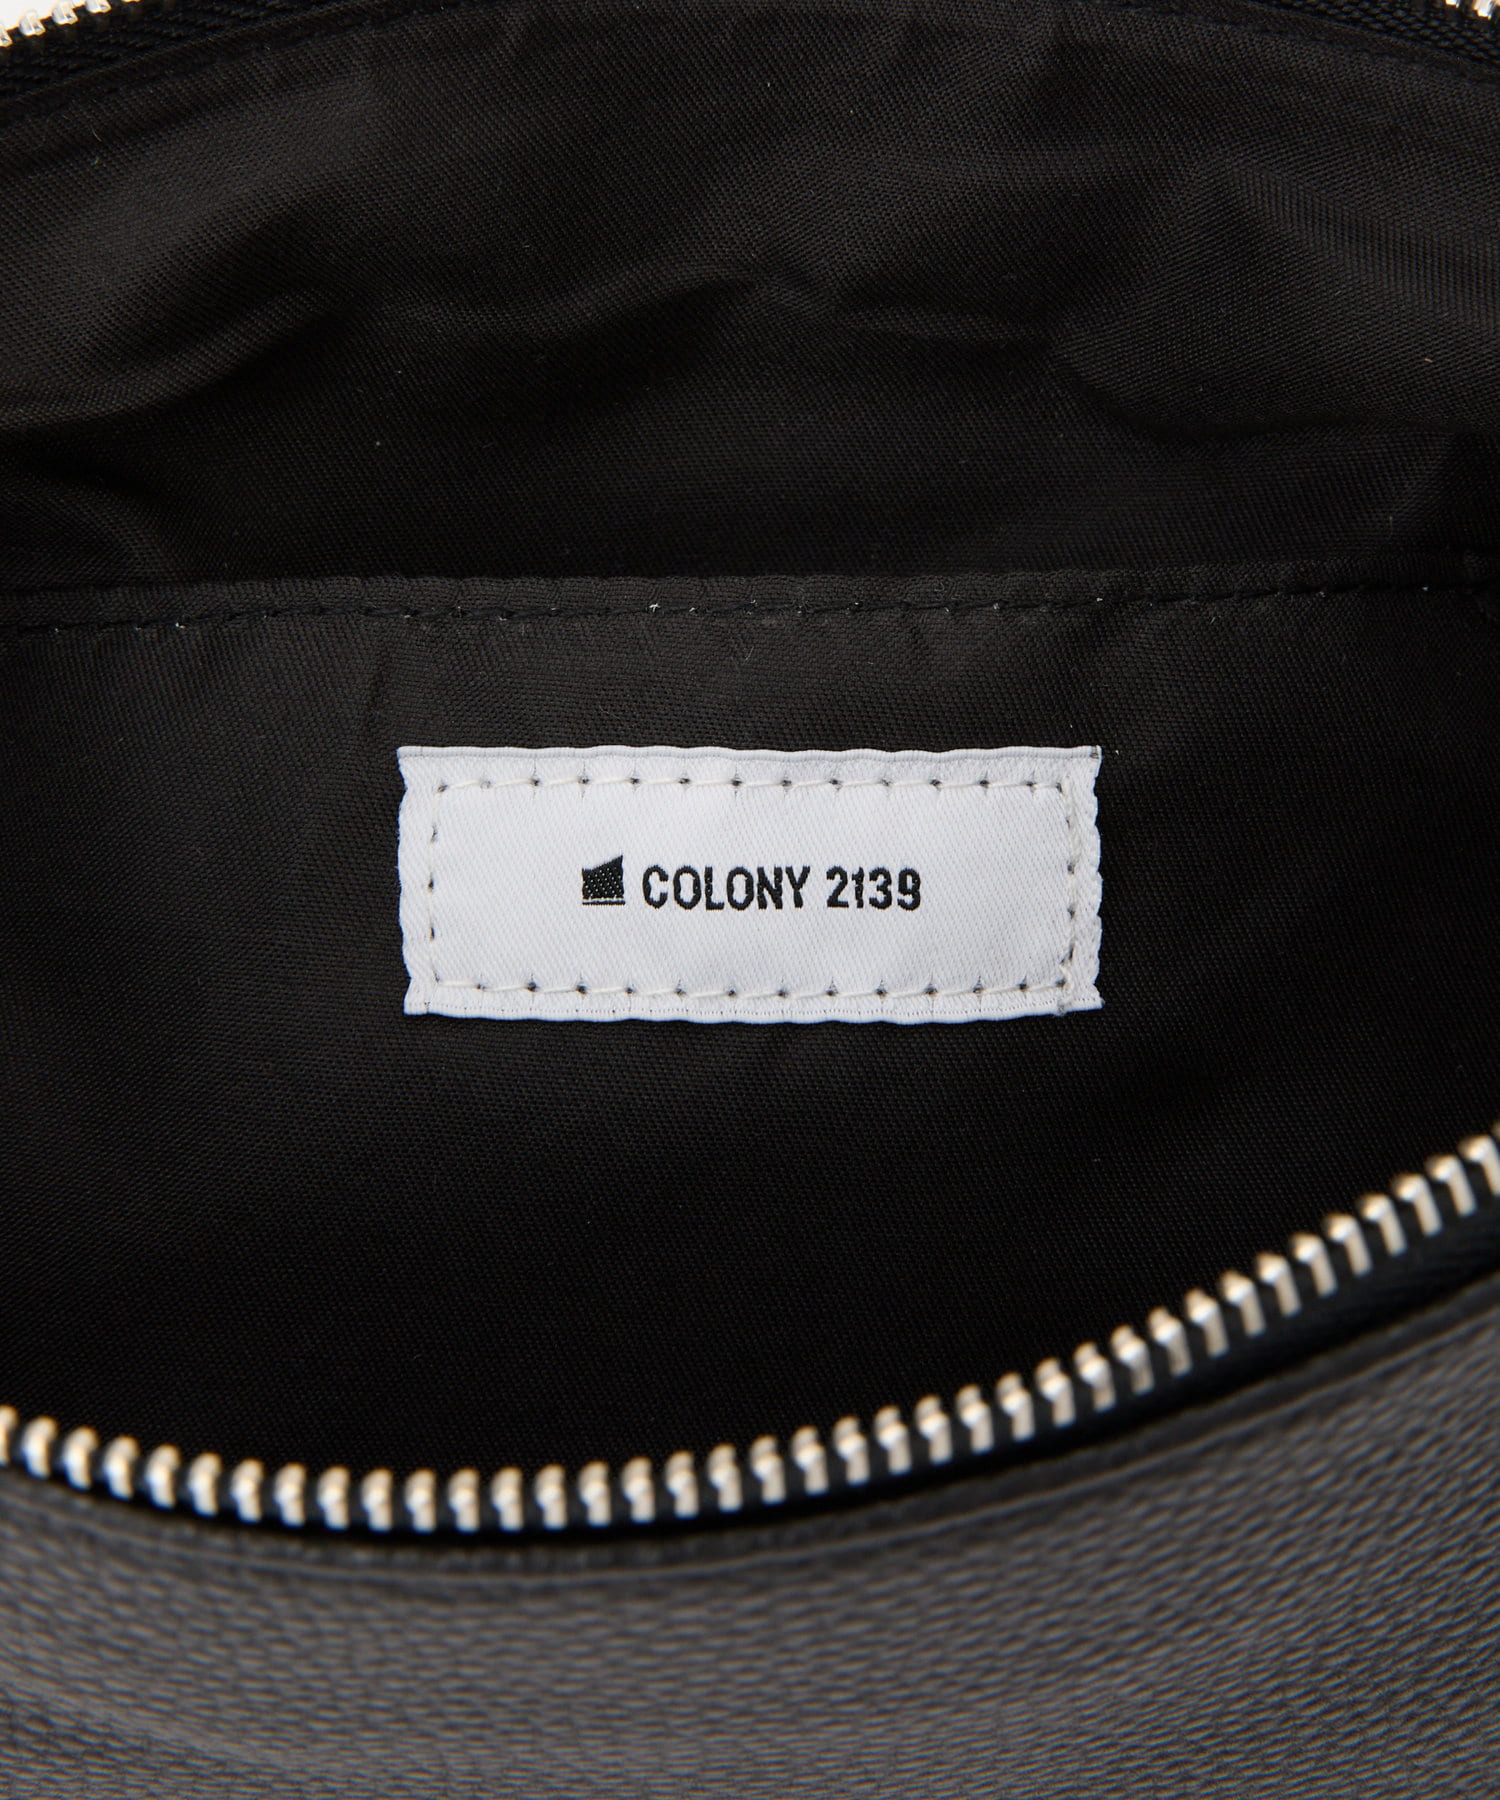 COLONY 2139(コロニー トゥーワンスリーナイン) シュリンクサコッシュショルダーバッグ